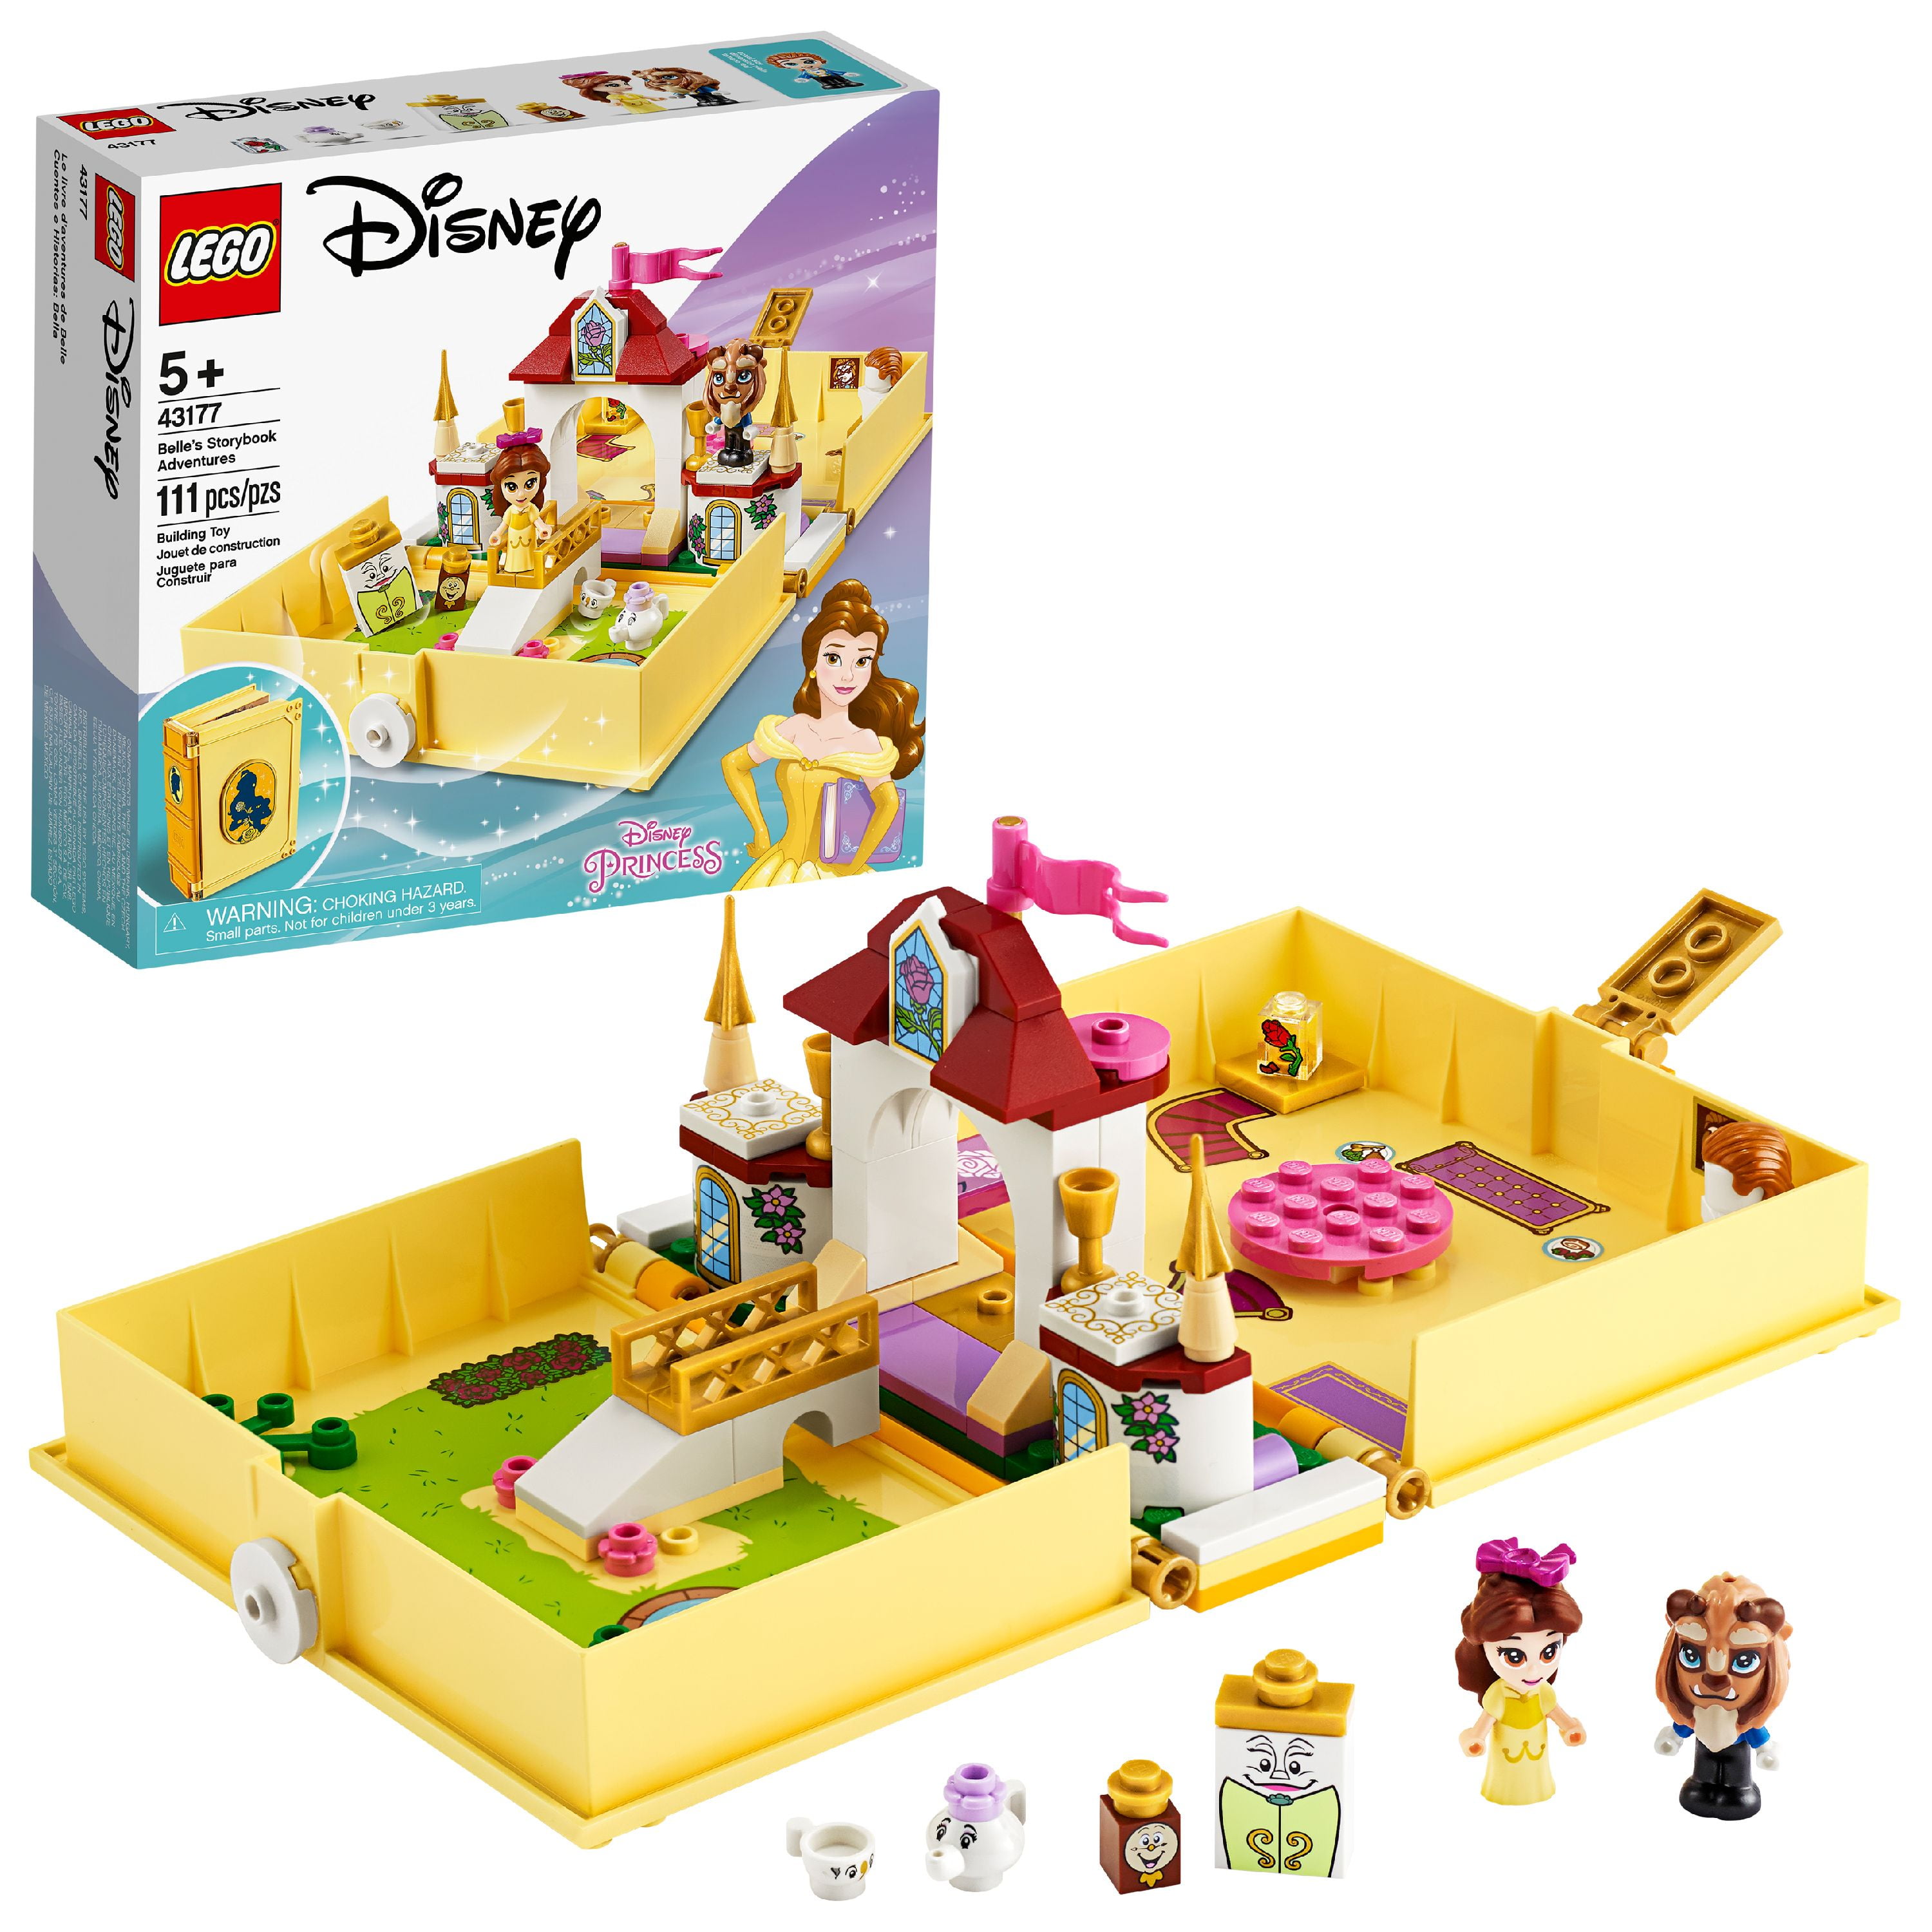 LEGO Disney Belle's Storybook Adventures 43177 Toy (111 Pieces) - Walmart.com